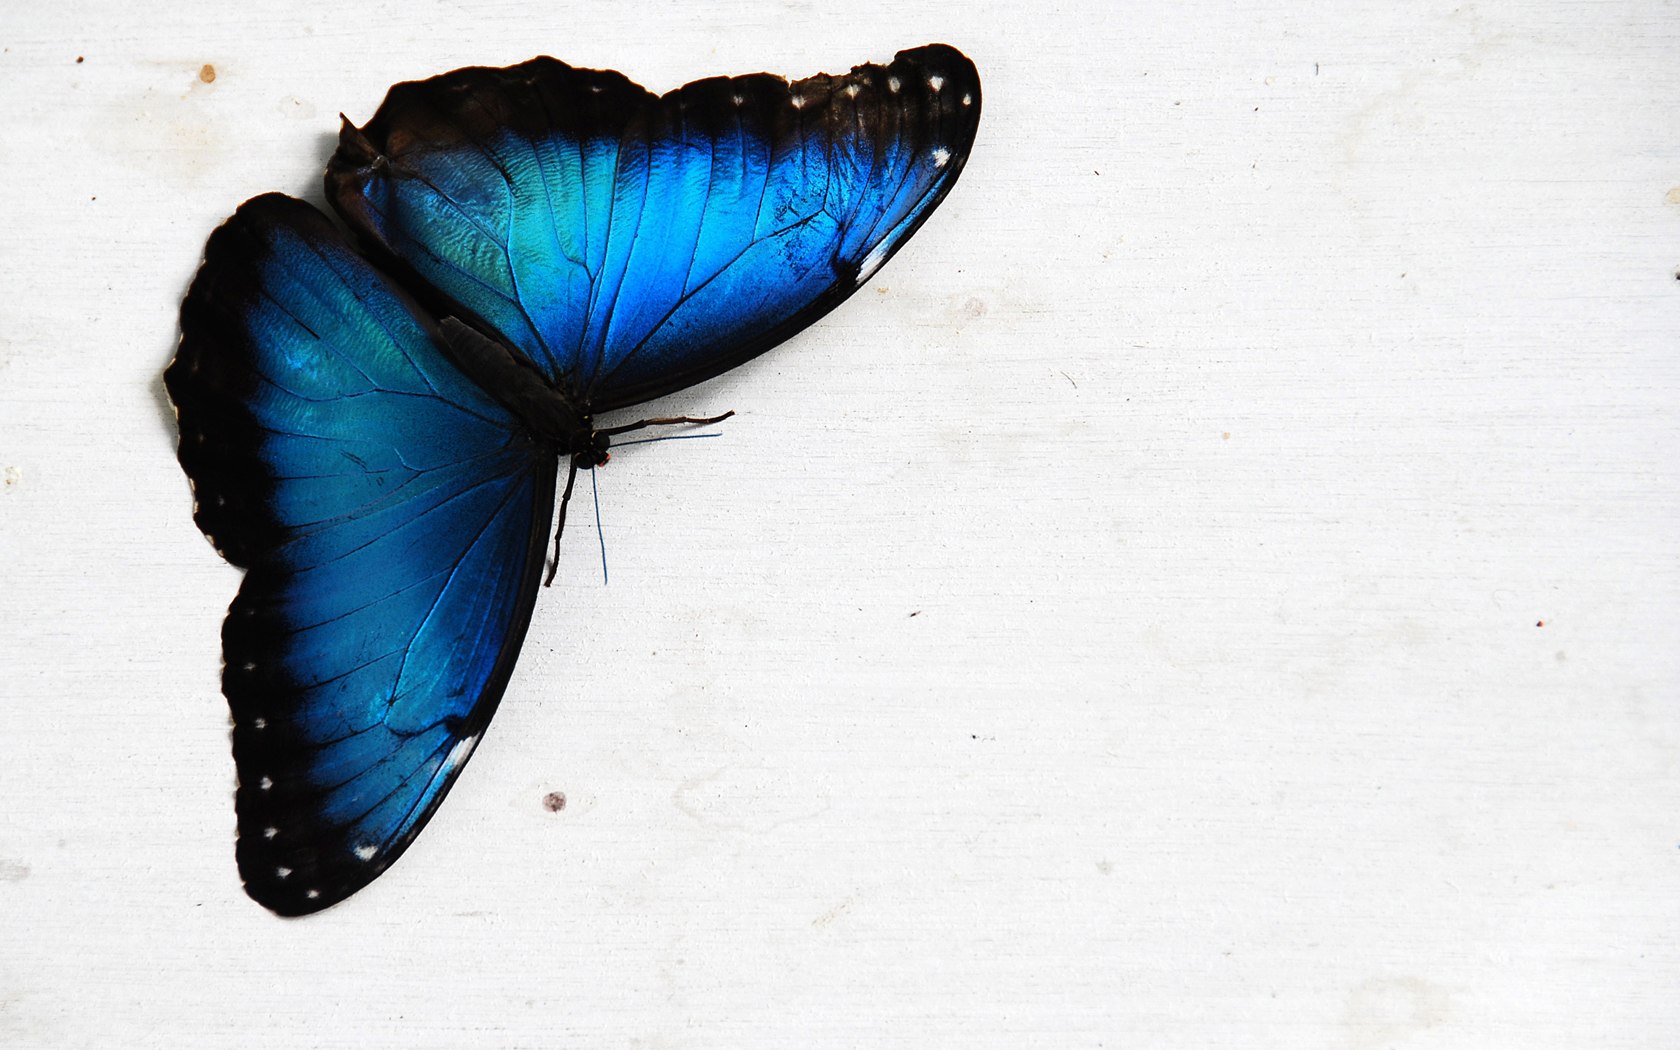 Blue Butterfly Background Wallpaper